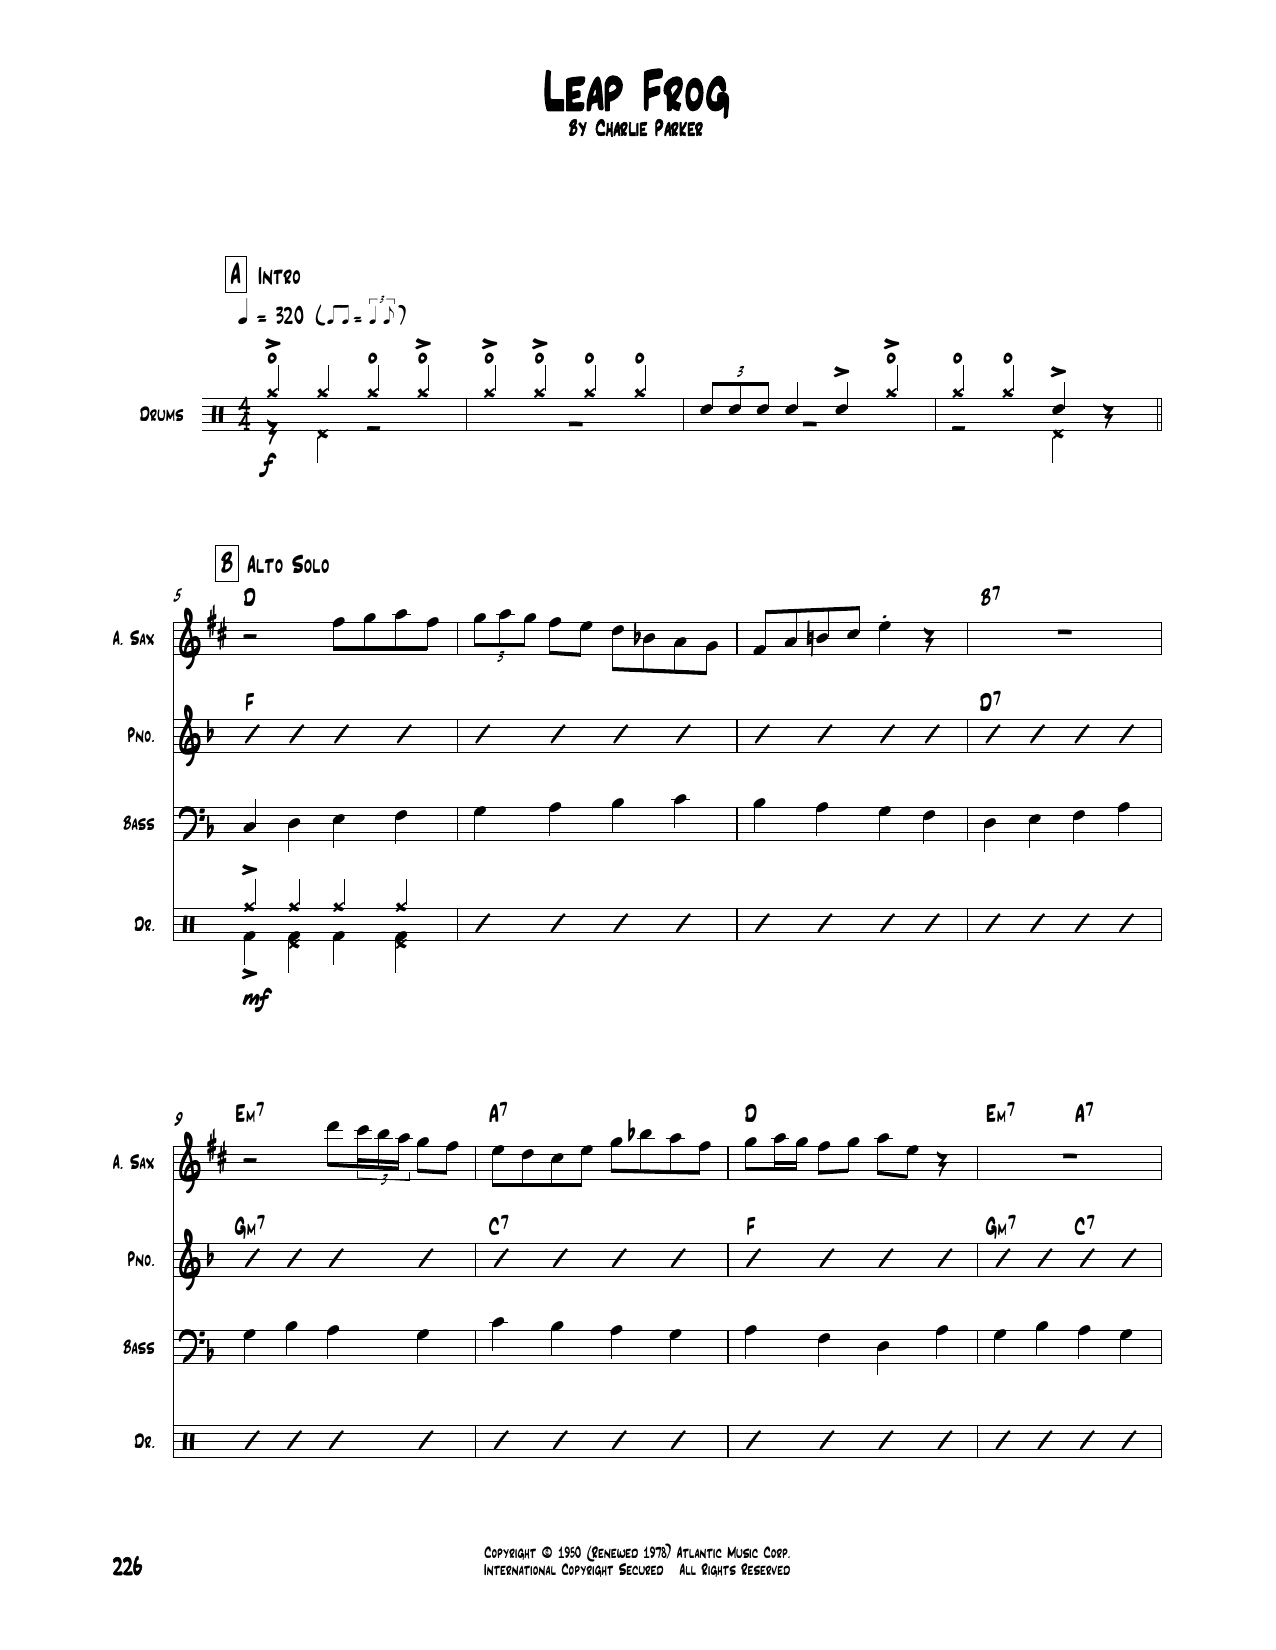 Charlie Parker Leap Frog Sheet Music Notes & Chords for Transcribed Score - Download or Print PDF